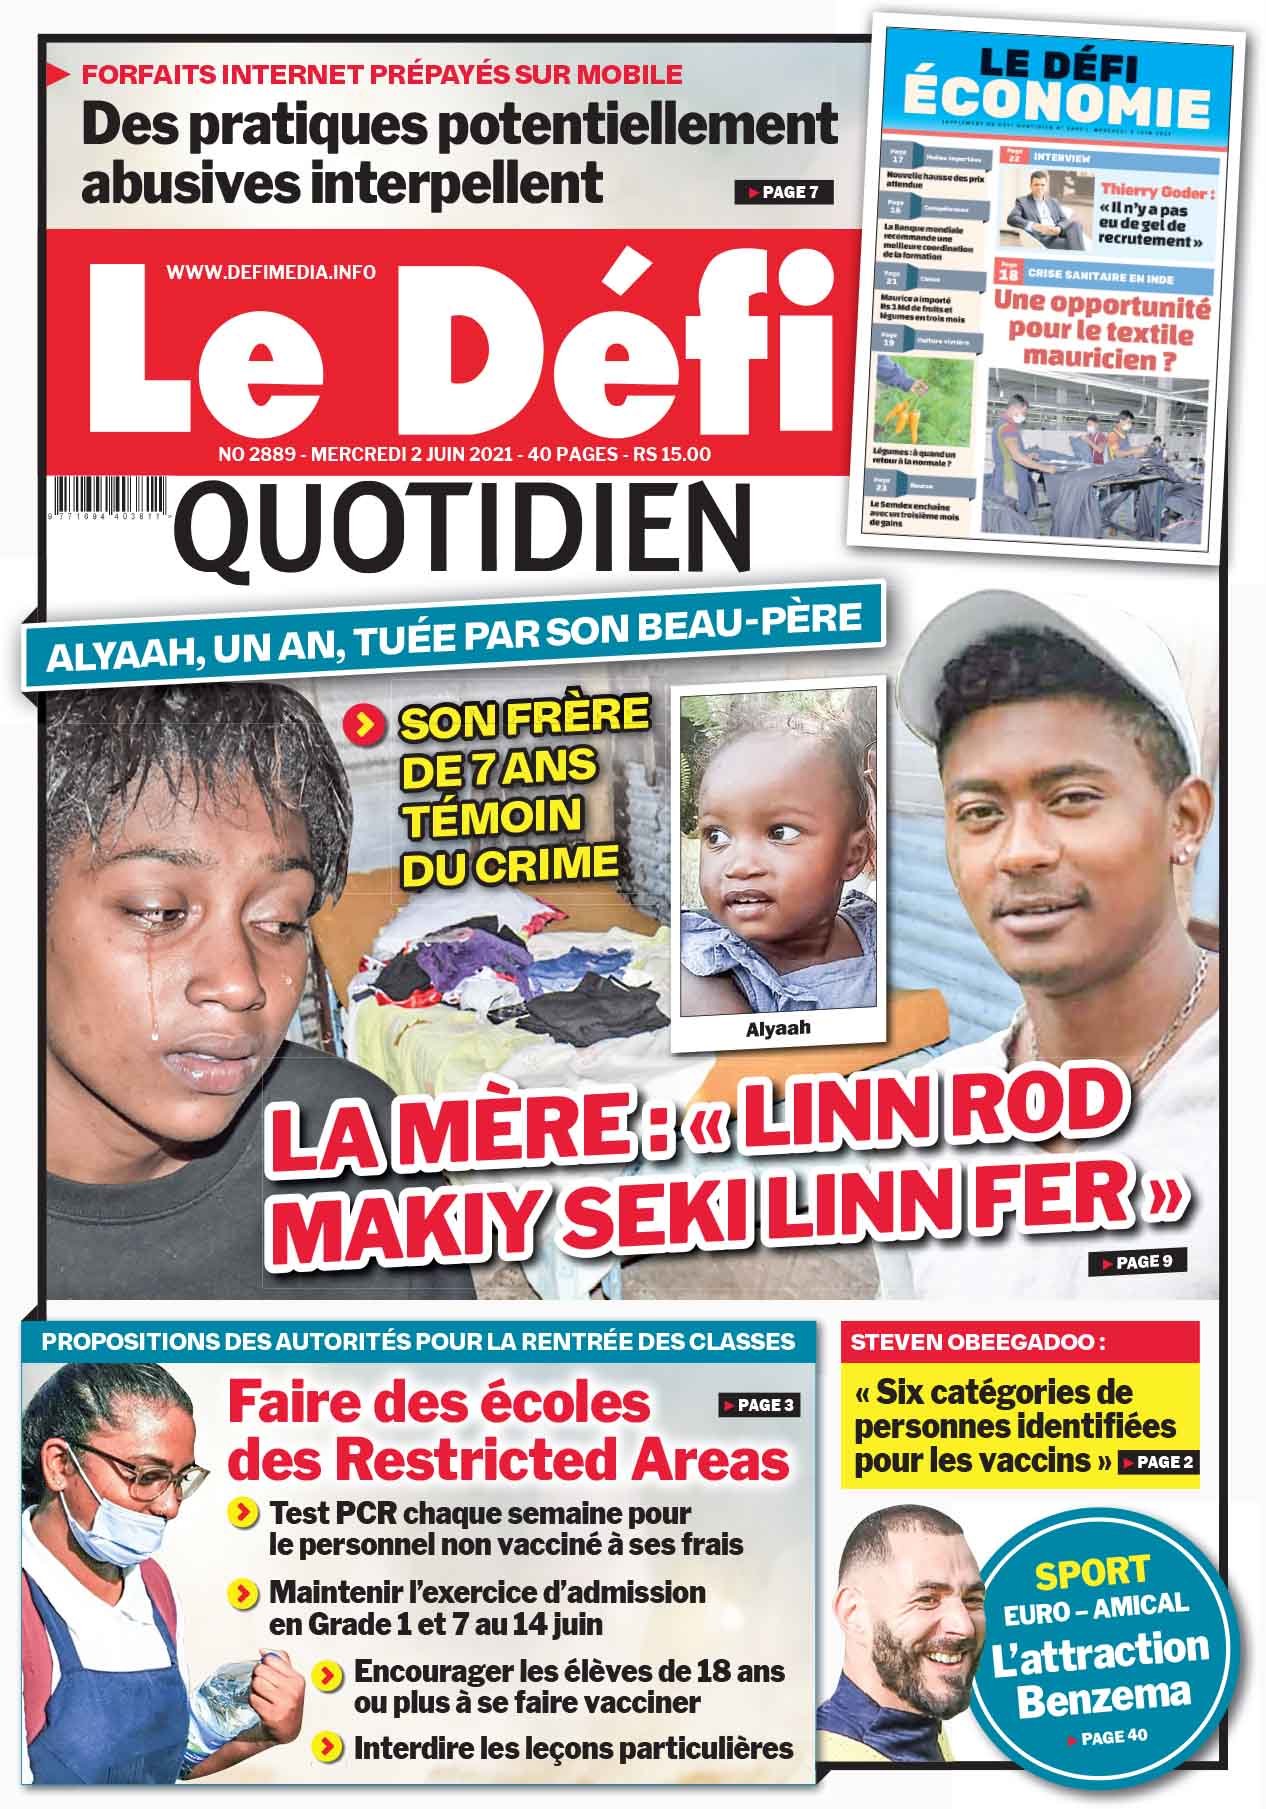 Cover - Quotidien 2889